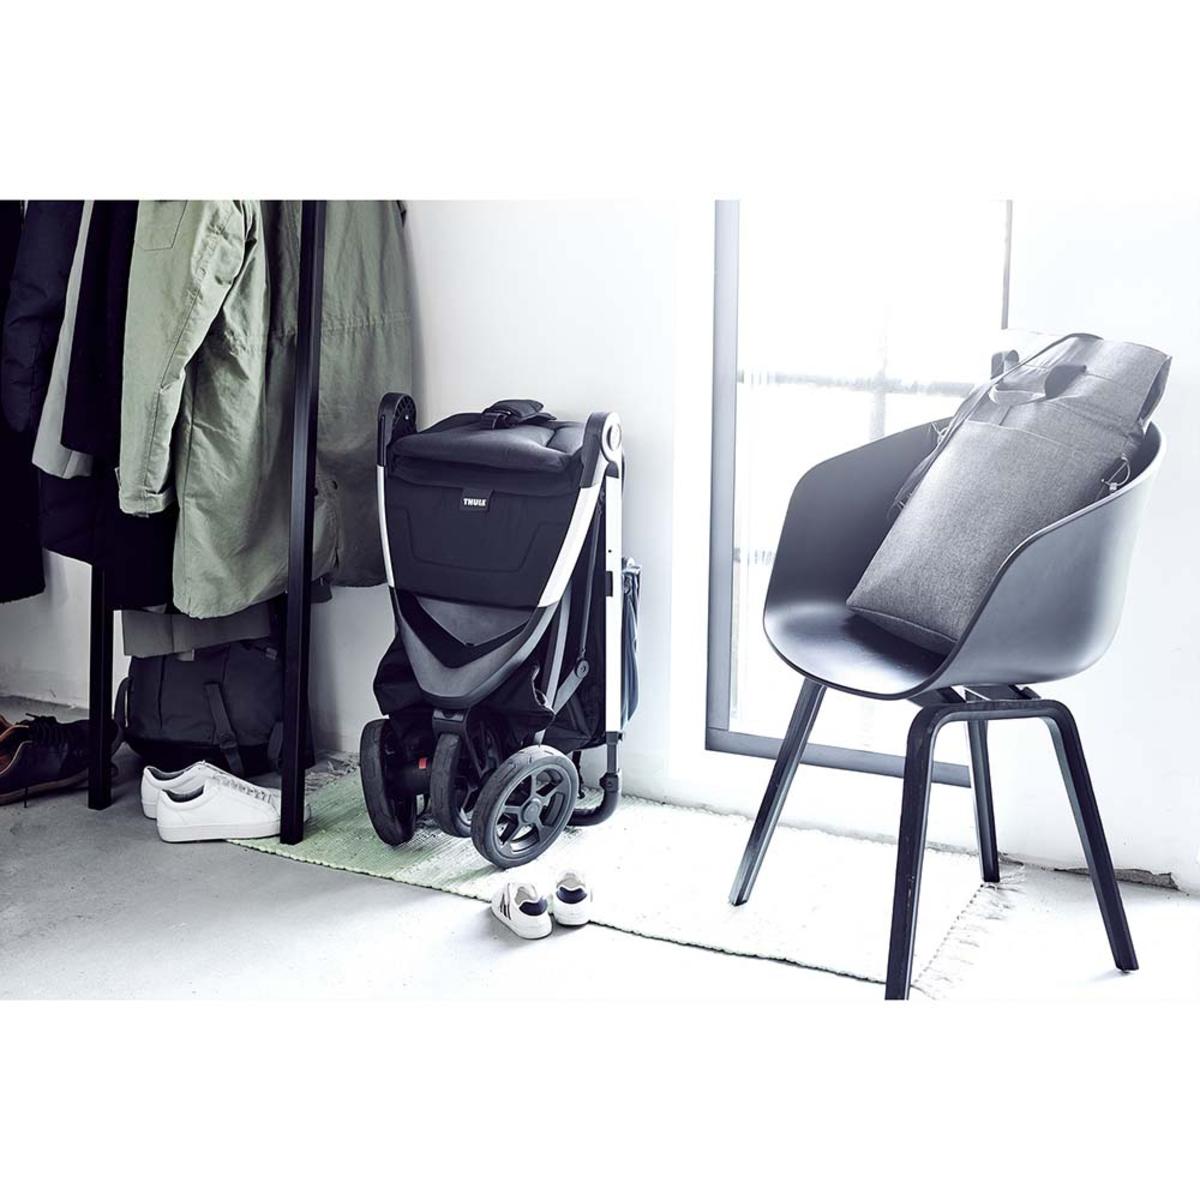 Thule Spring Flexible Stroller - Black/Grey Melange